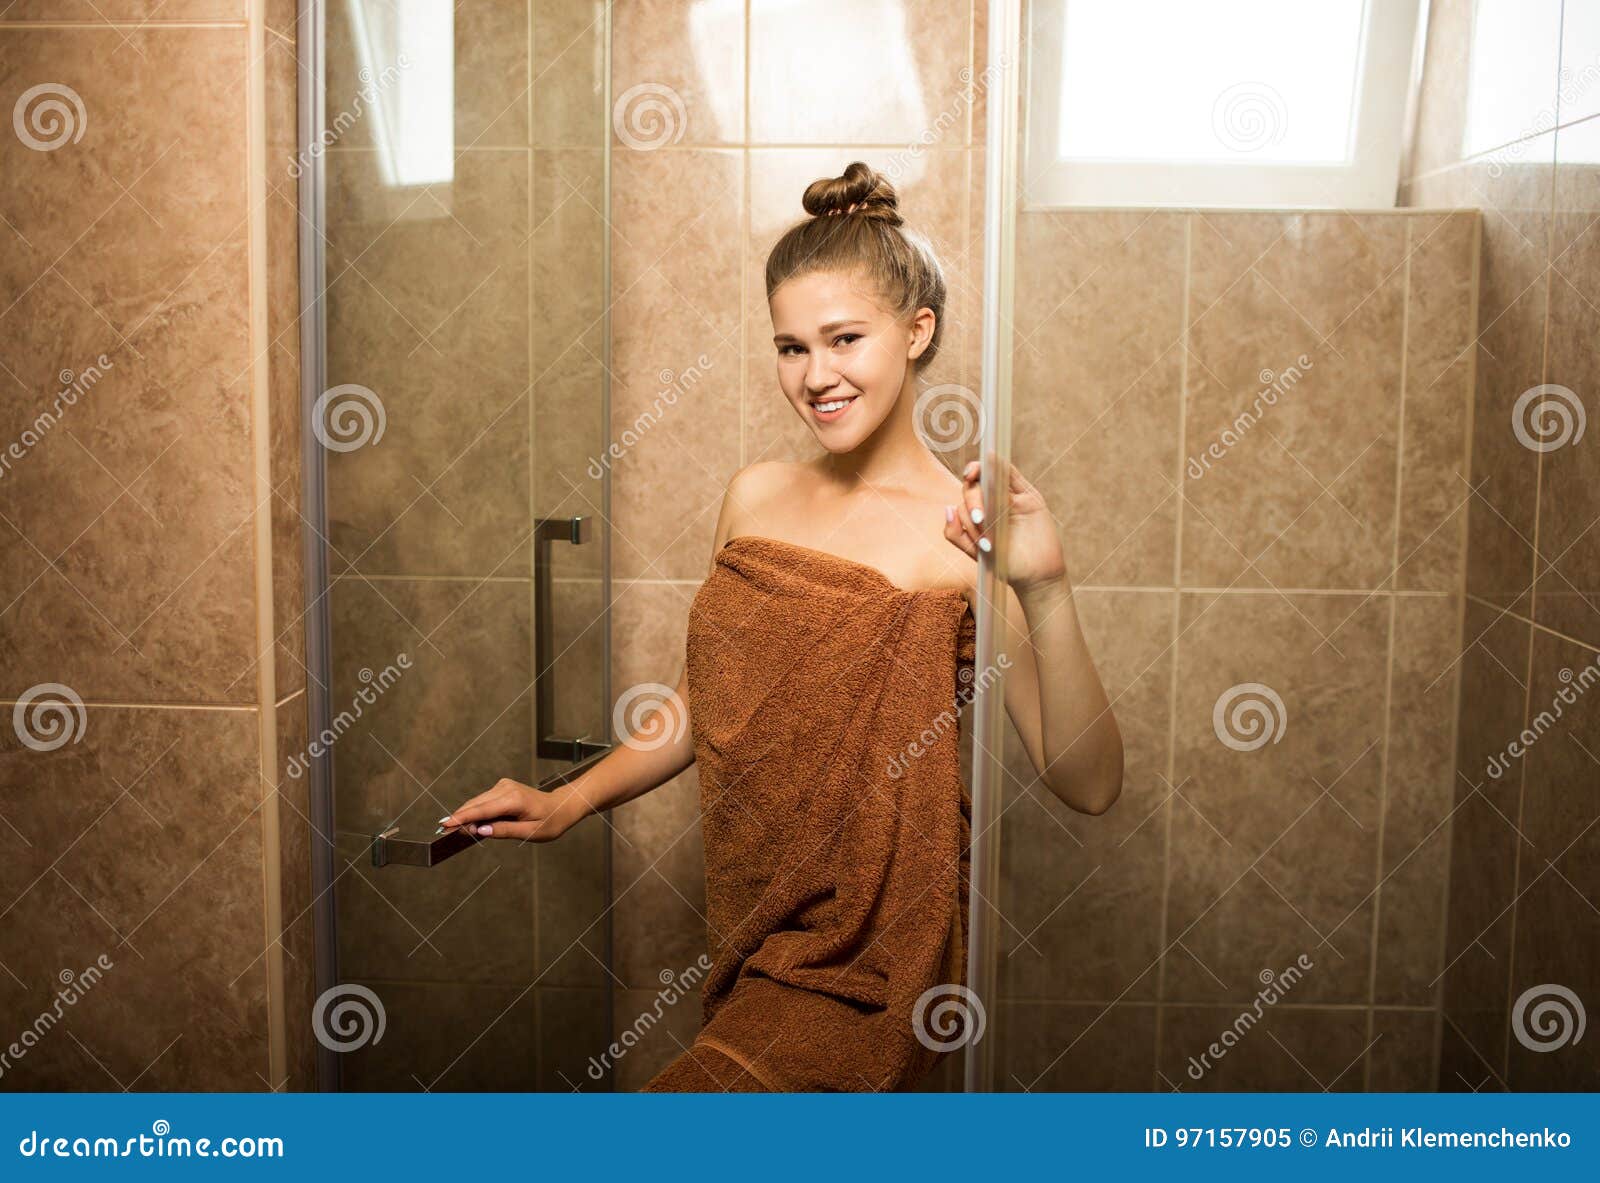 Cute Teen In Shower clips hot